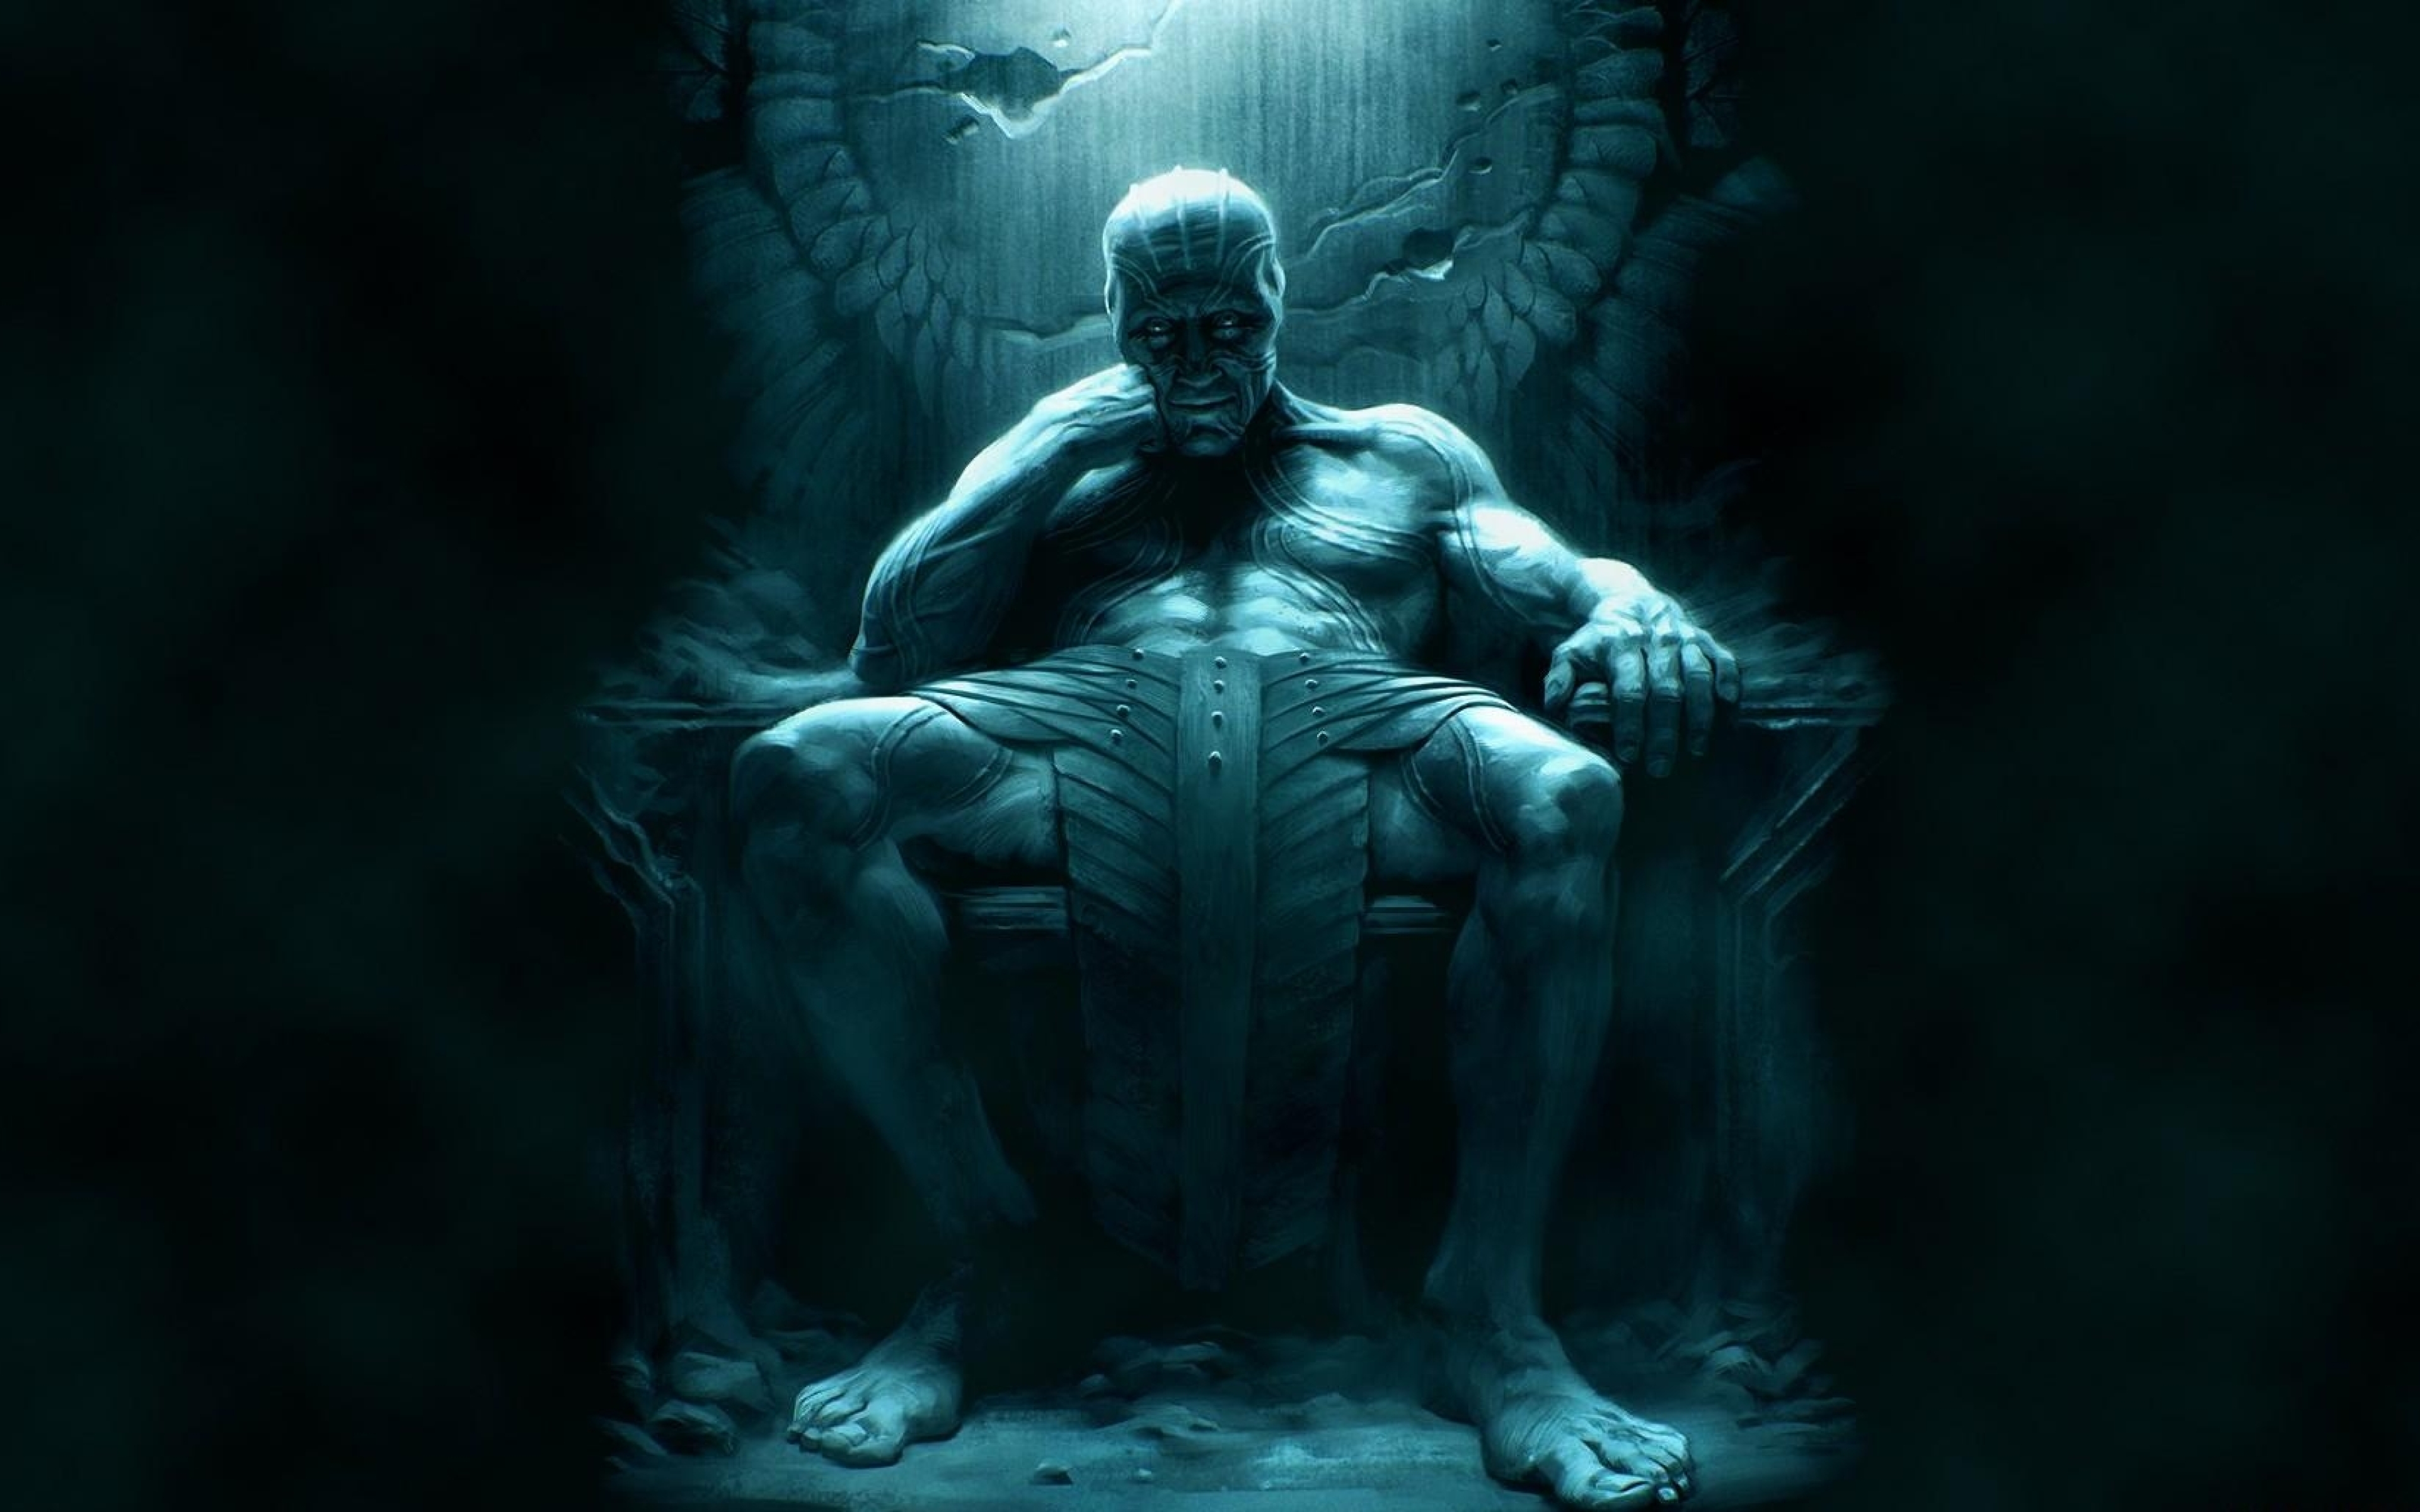 Сидит на огромном черном. Ётунхейм трон. Человек на троне. Демон на троне. Темная фигура на троне.